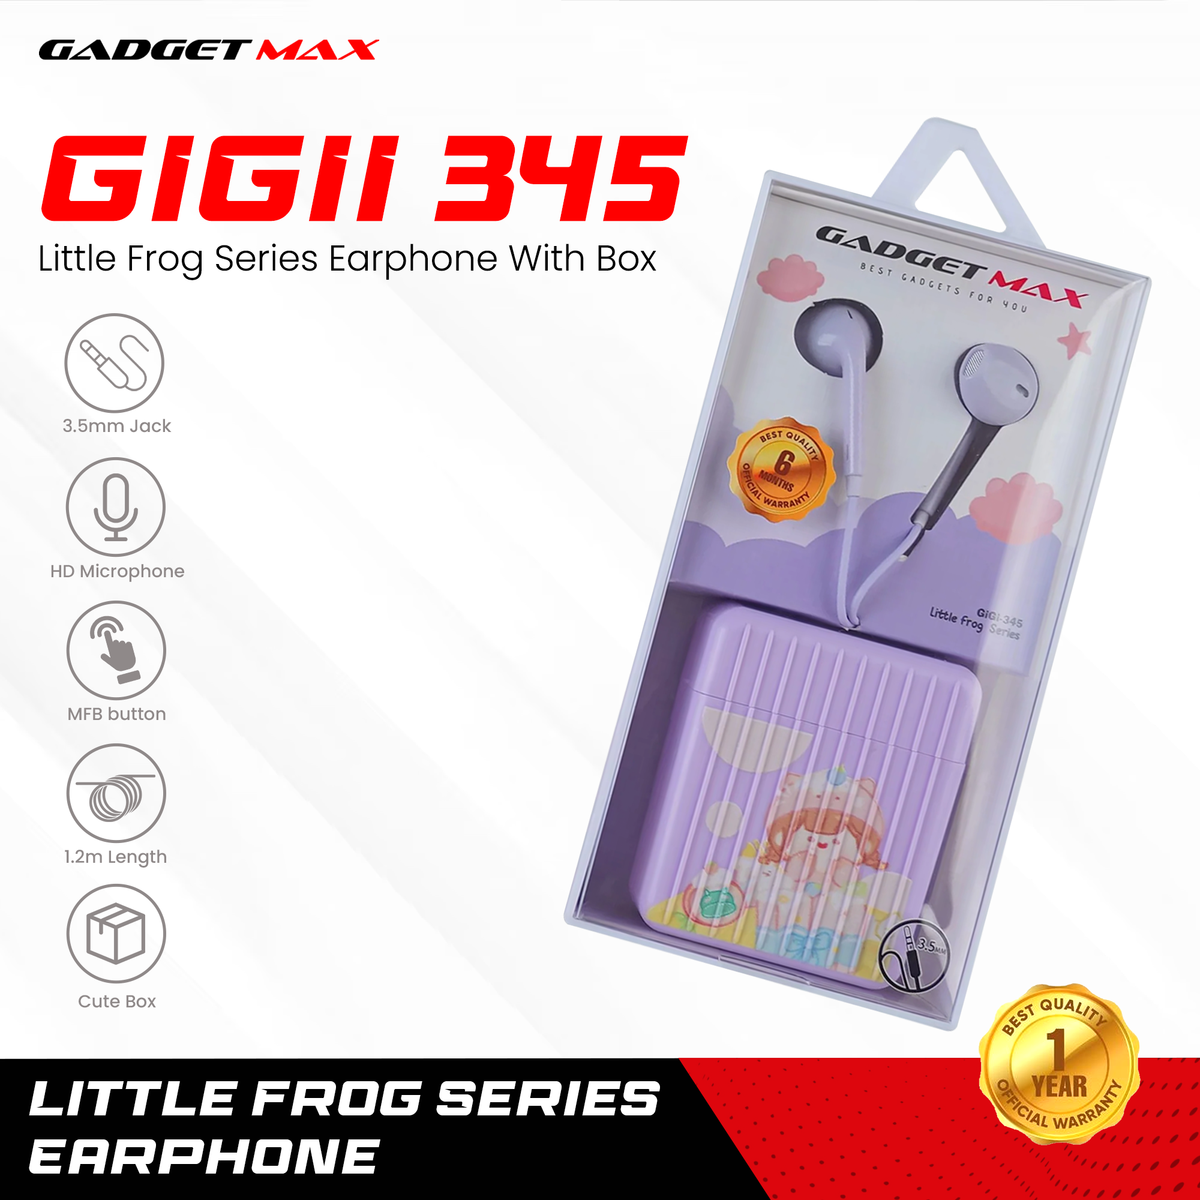 GADGET MAX GIGII-345 LITTLE FROG SERIES 3.5MM WIRED EARPHONE - PURPLE